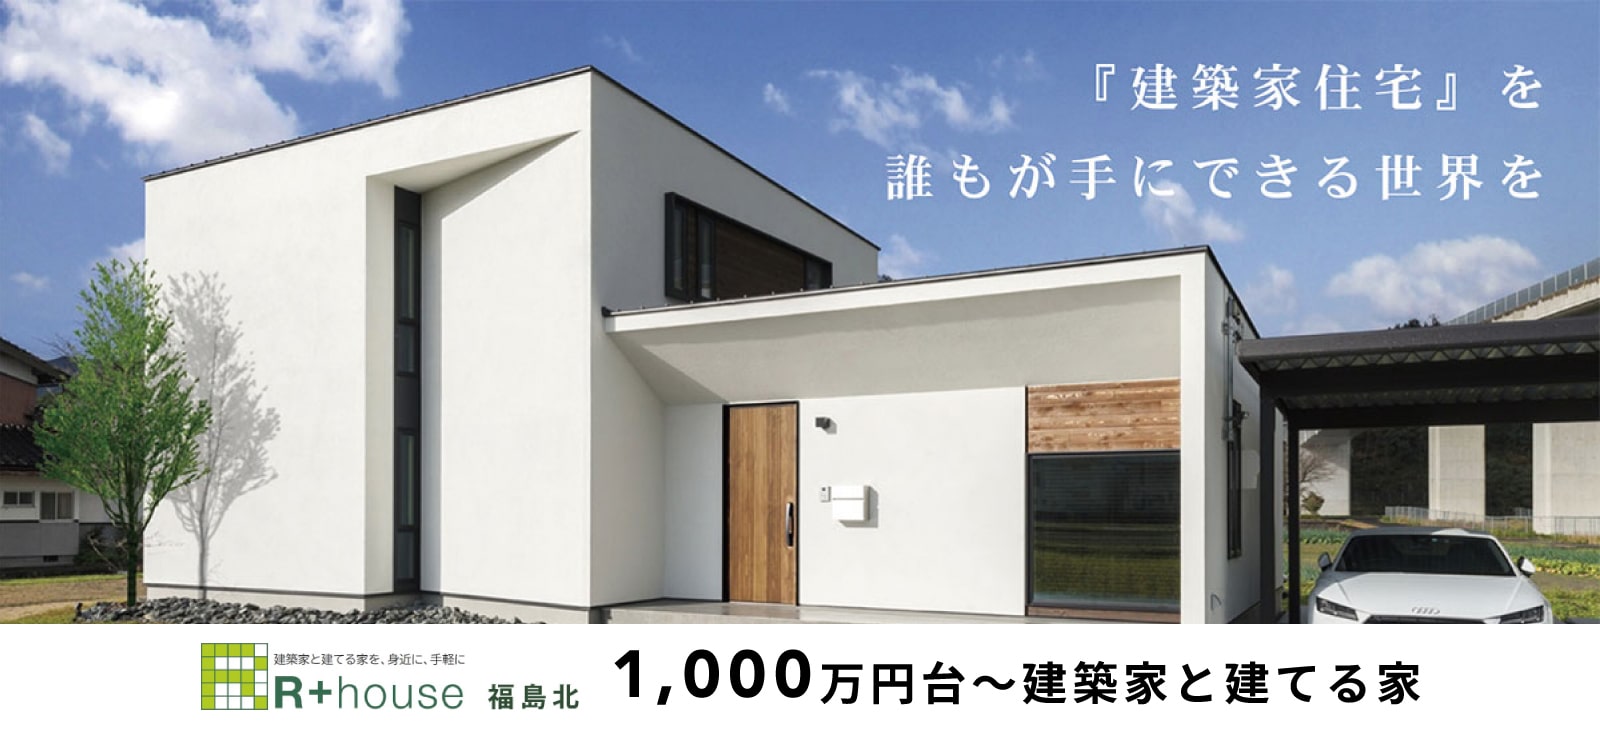 R+house 福島北 1,000万円台〜建築家と建てる家